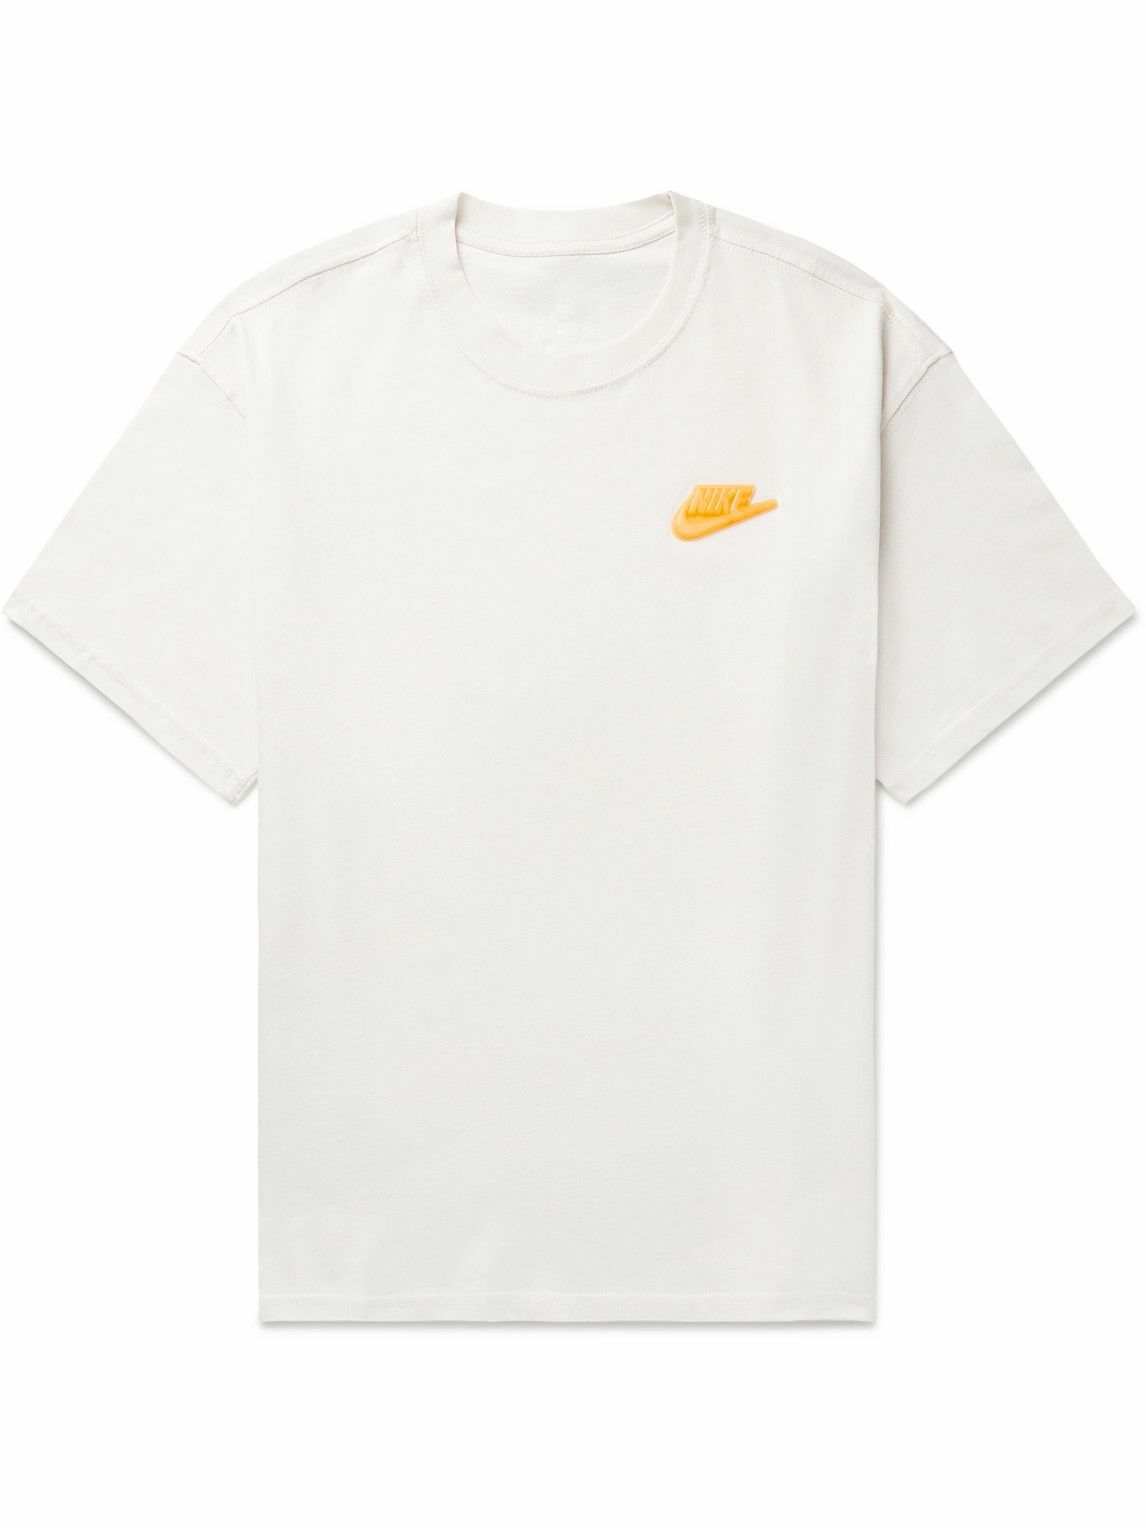 Nike - Logo-Appliquéd Printed Cotton-Jersey T-Shirt - White Nike